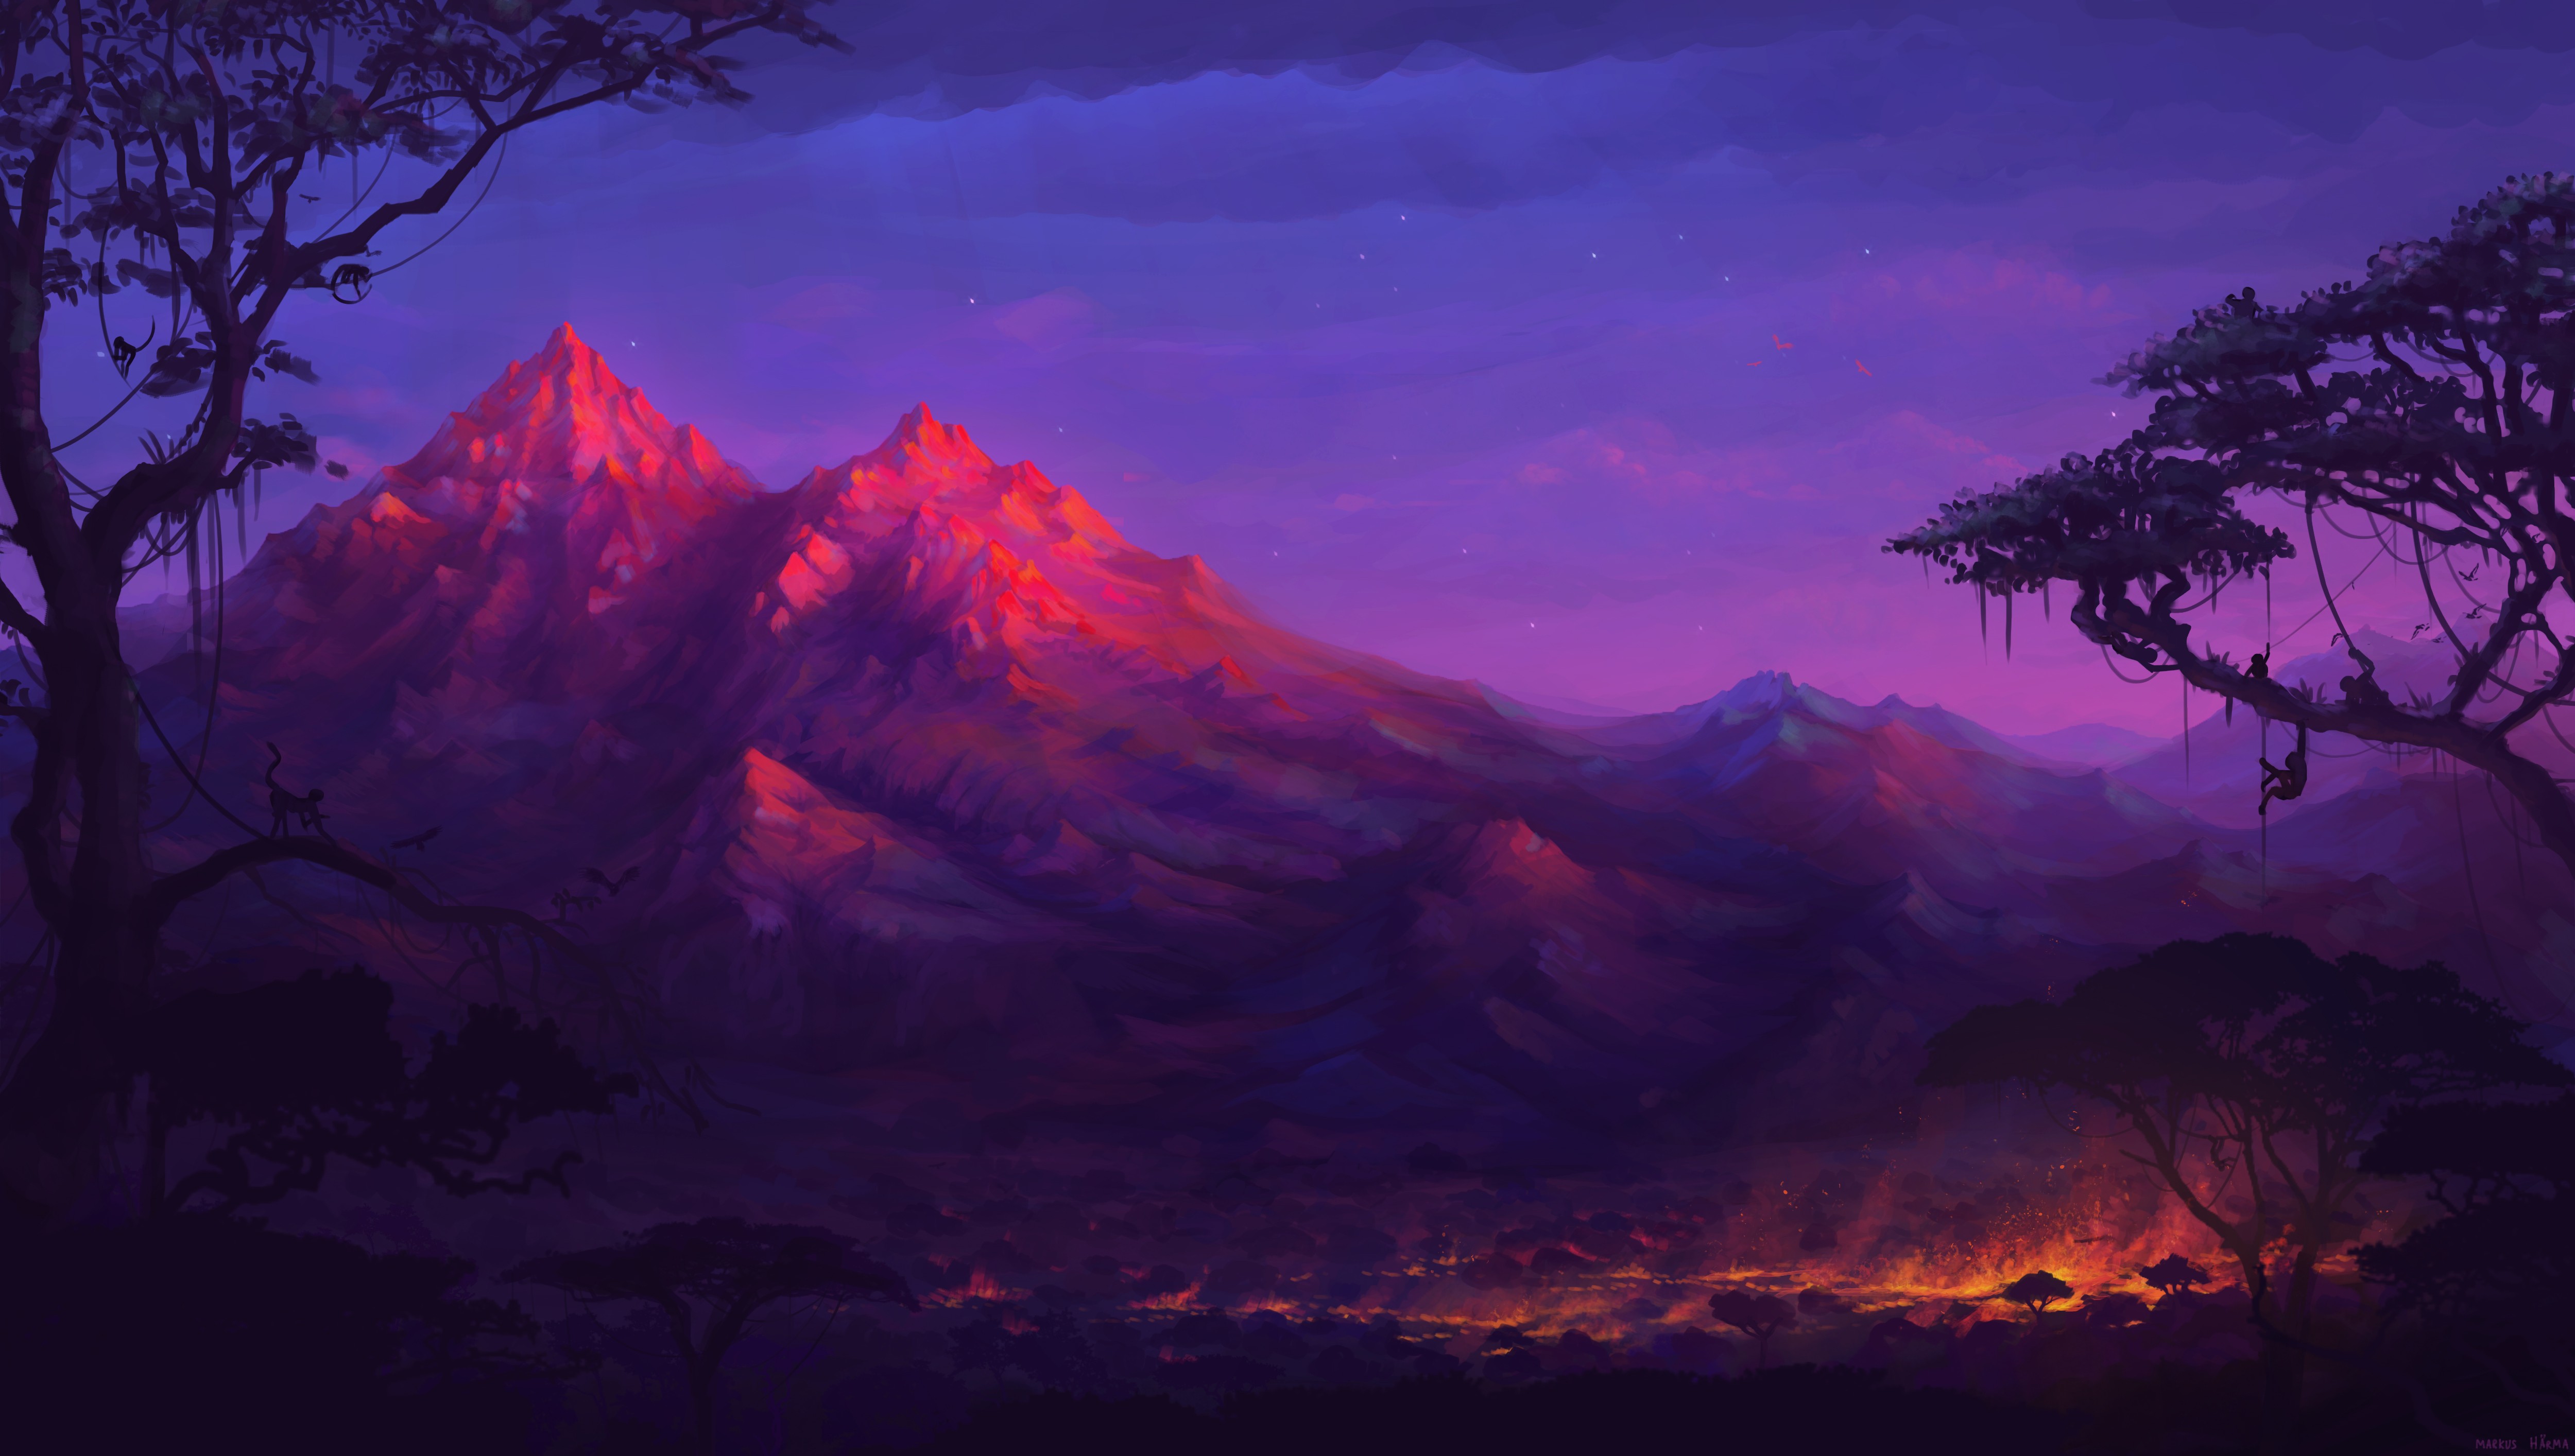 General 5000x2828 artwork fantasy art mountains colorful monkey night trees fire landscape